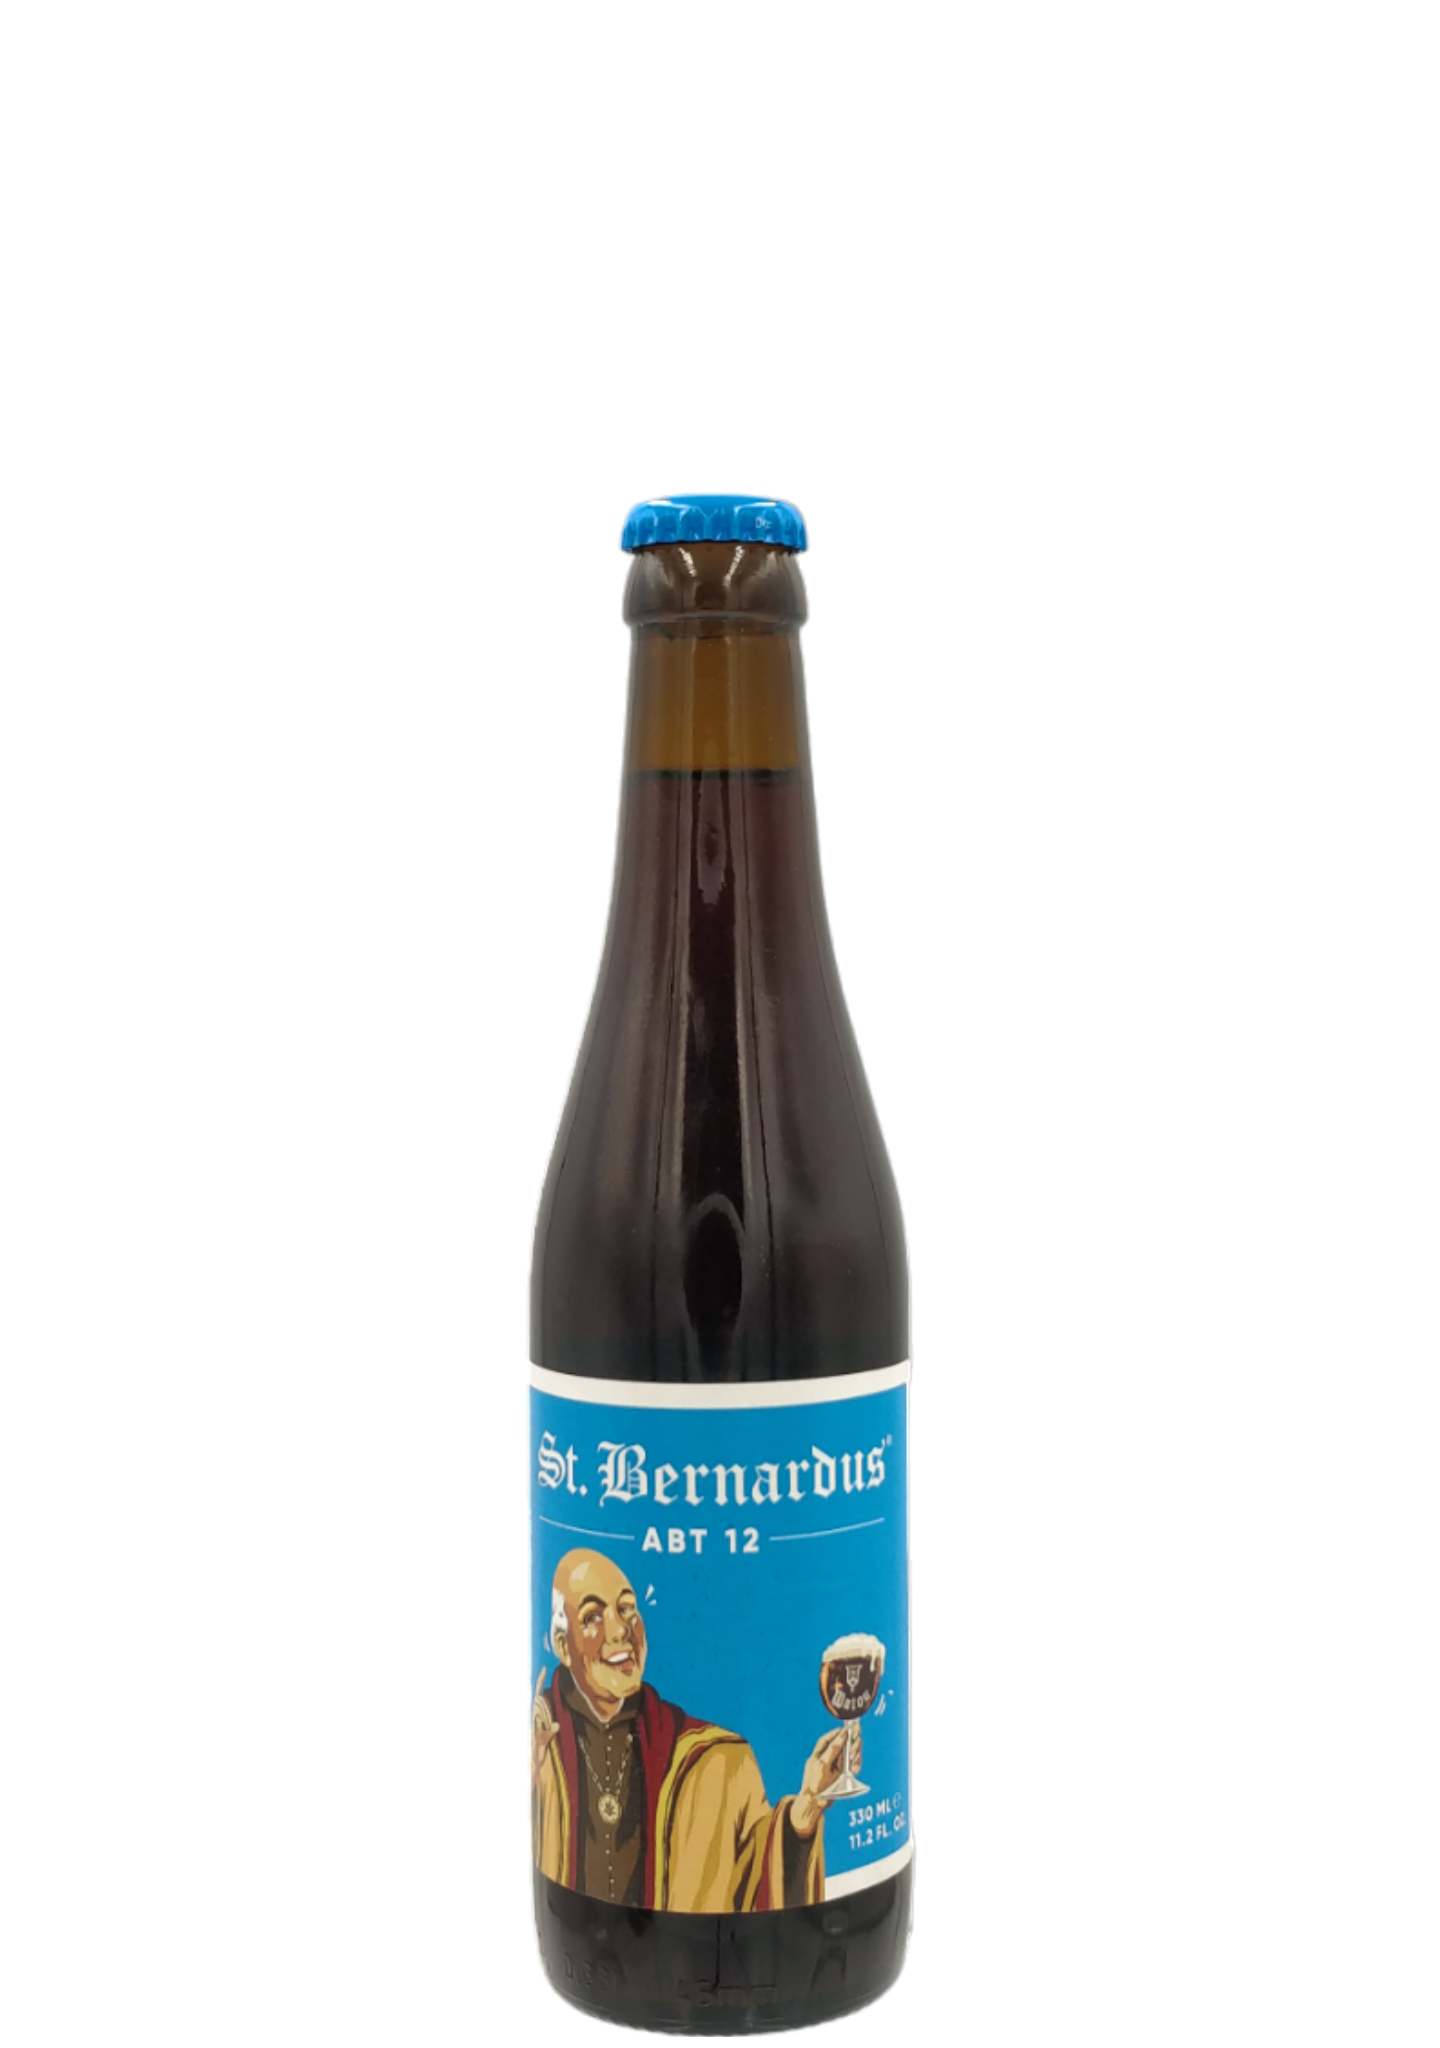 St. Bernardus Abt. 12 10% 33cl